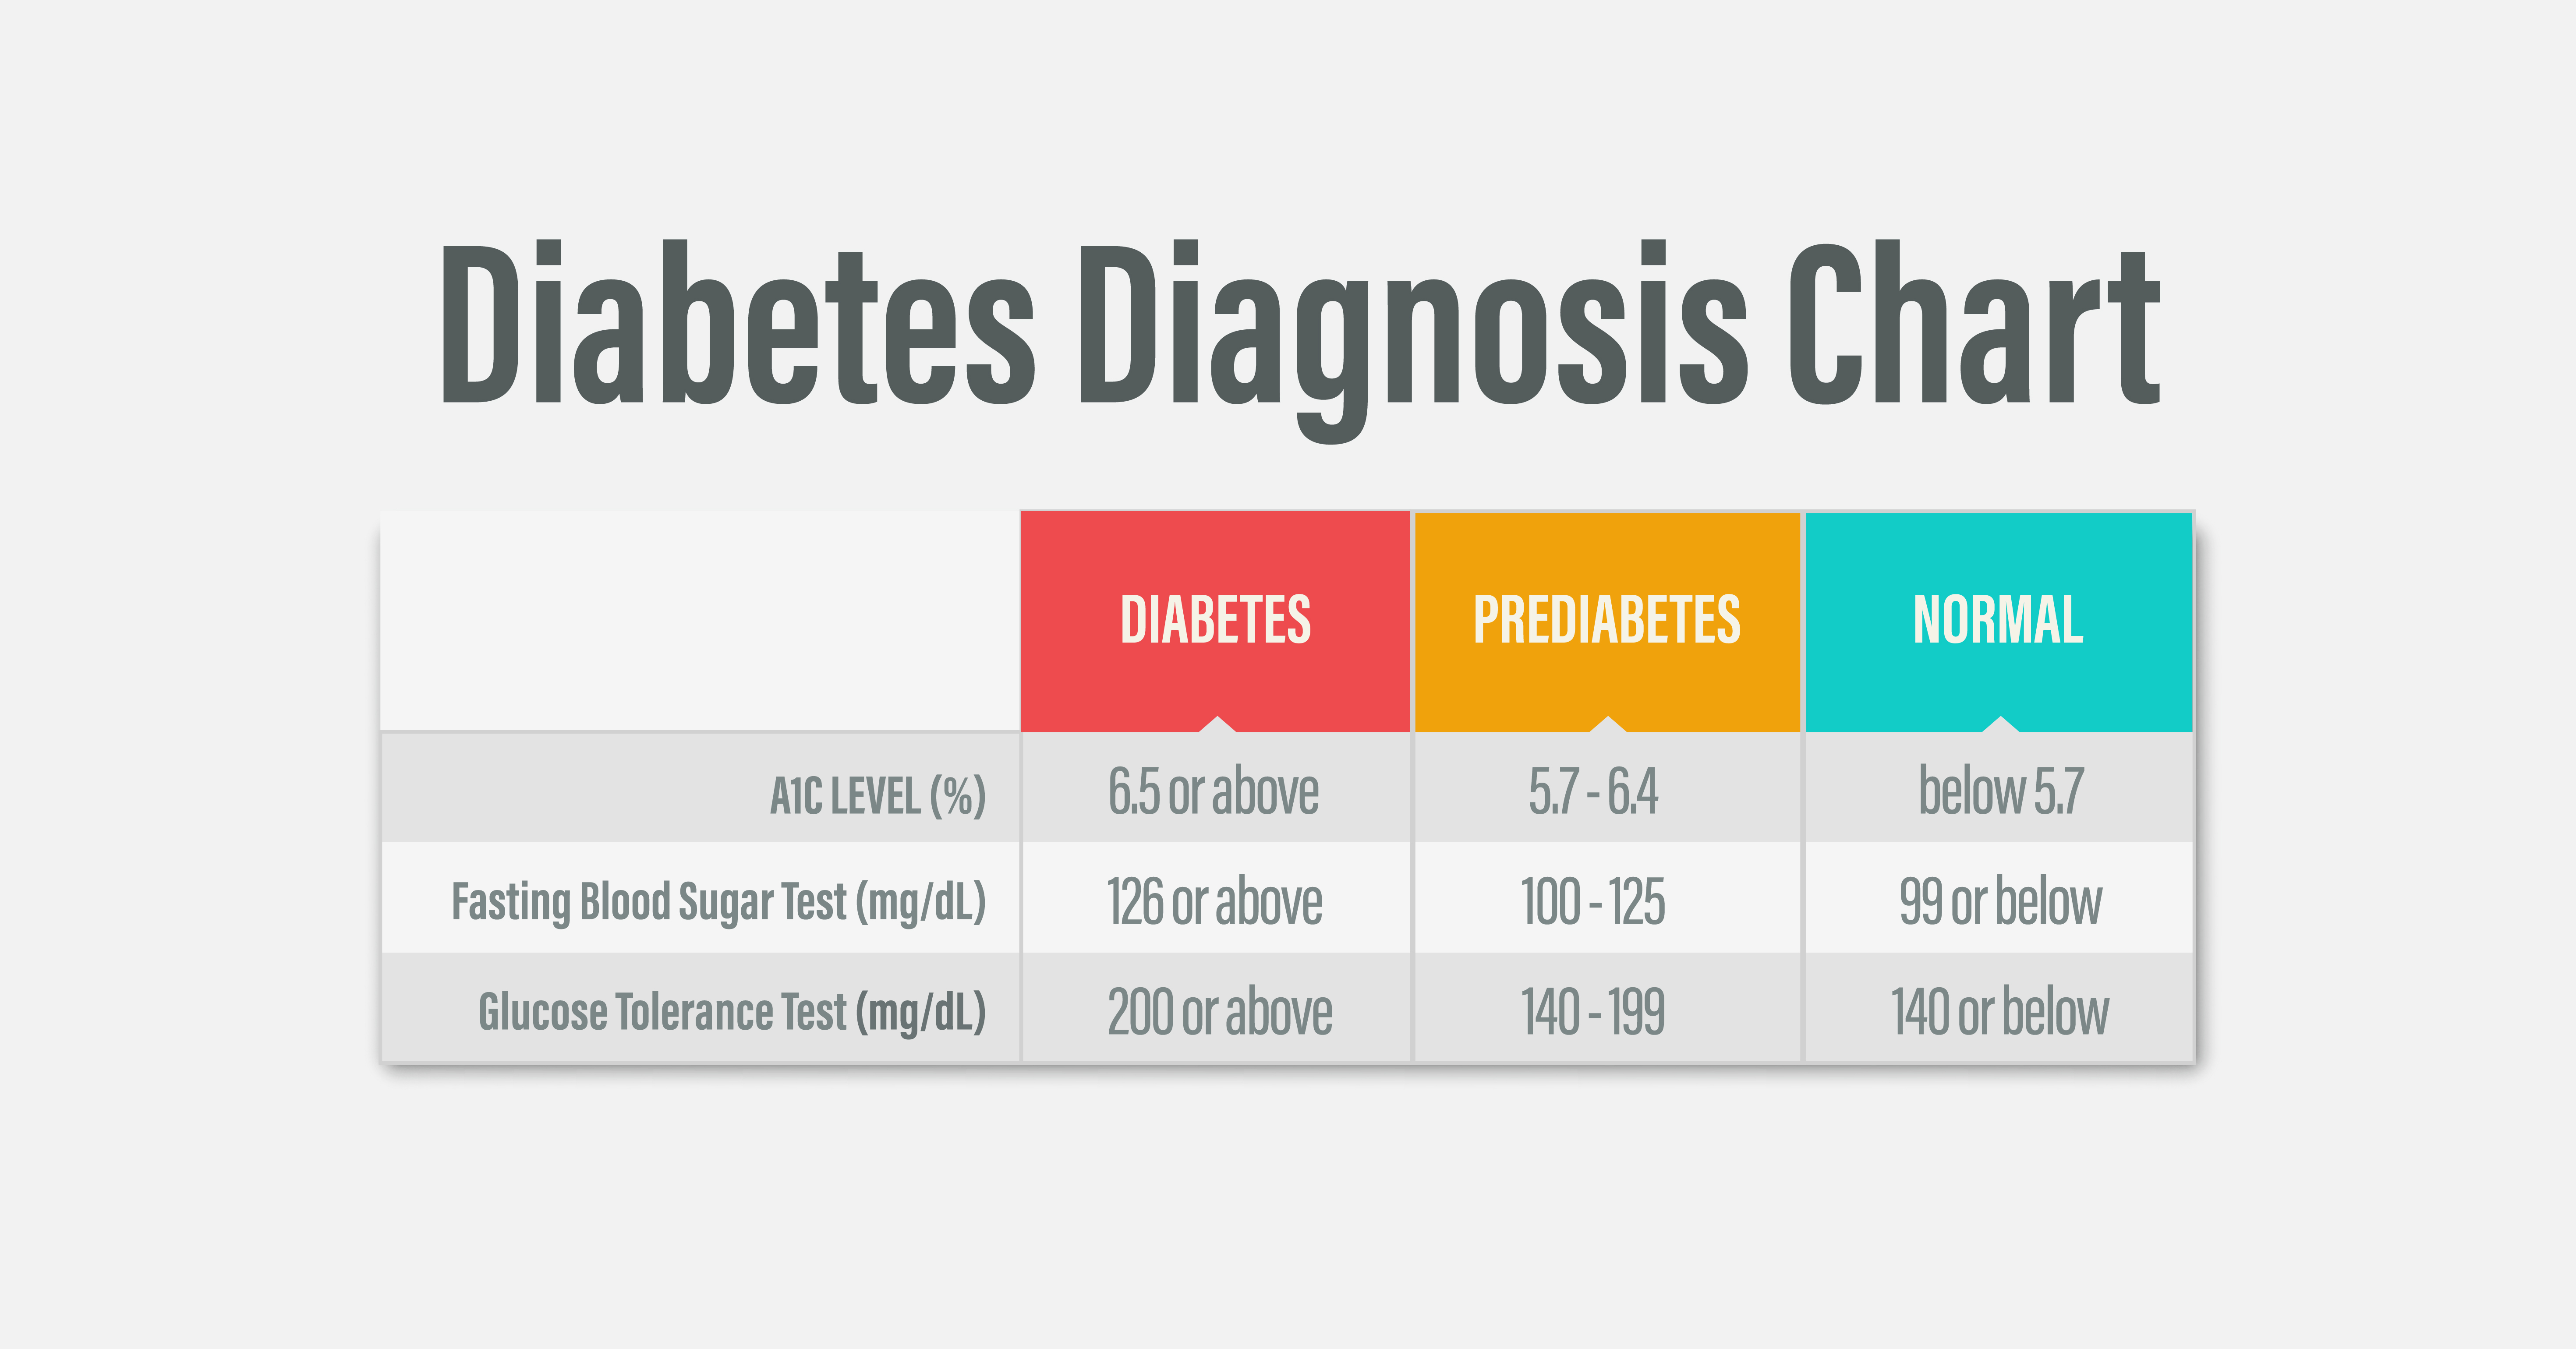 Diabetes & Prediabetes Normal Blood Sugar Level - Treatment @ MDIMC